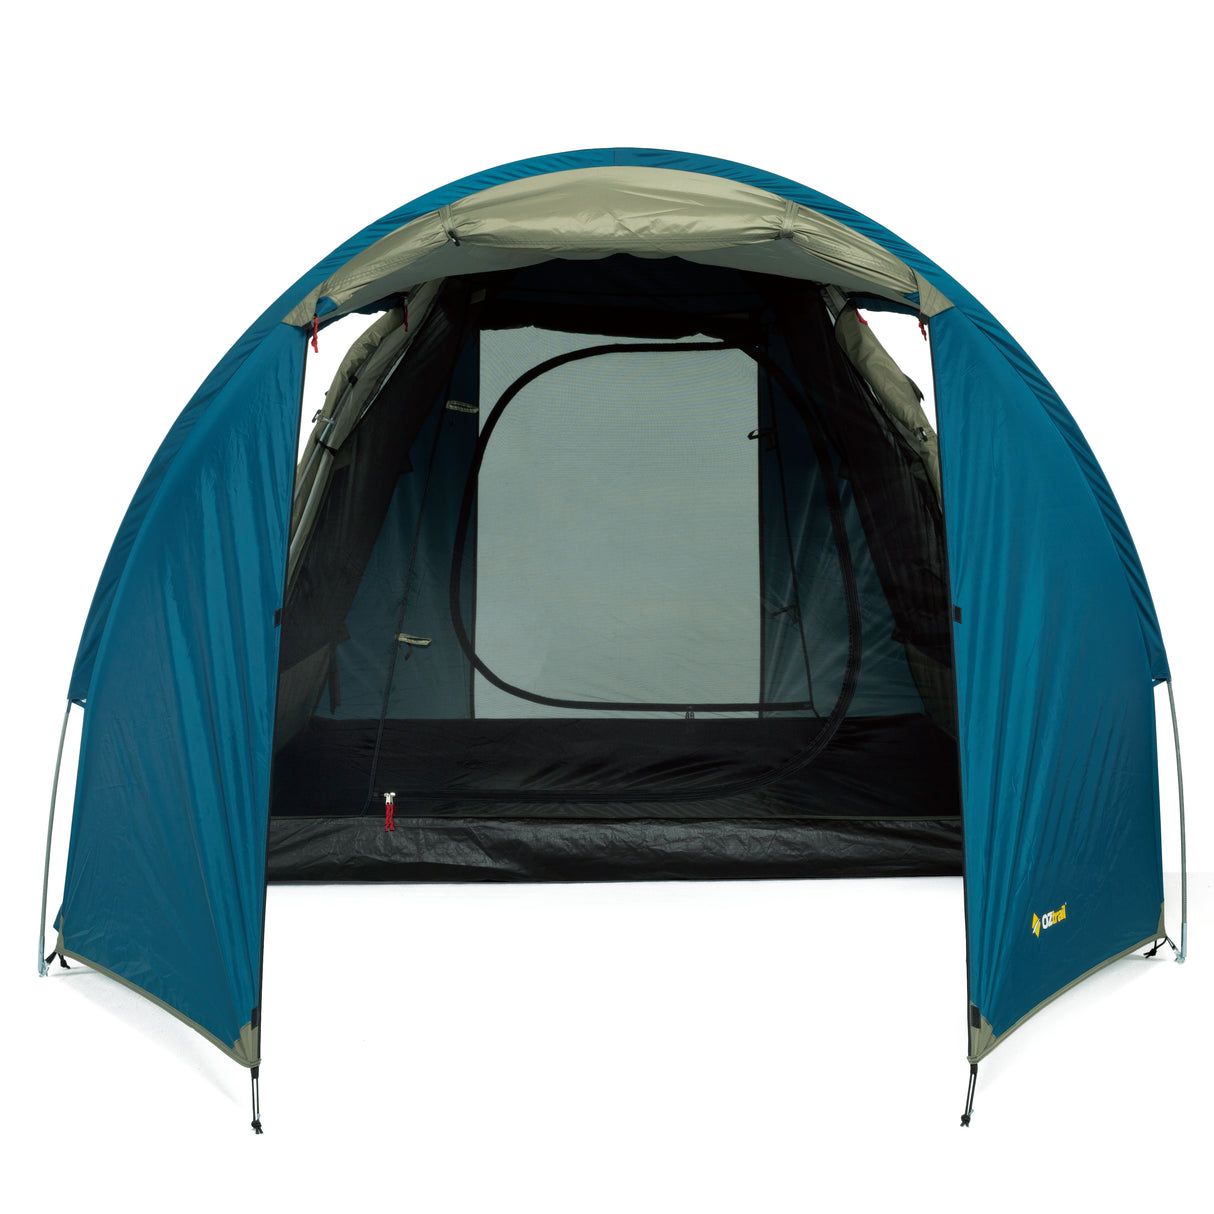 OZtrail Tasman 4V Person Dome Tent